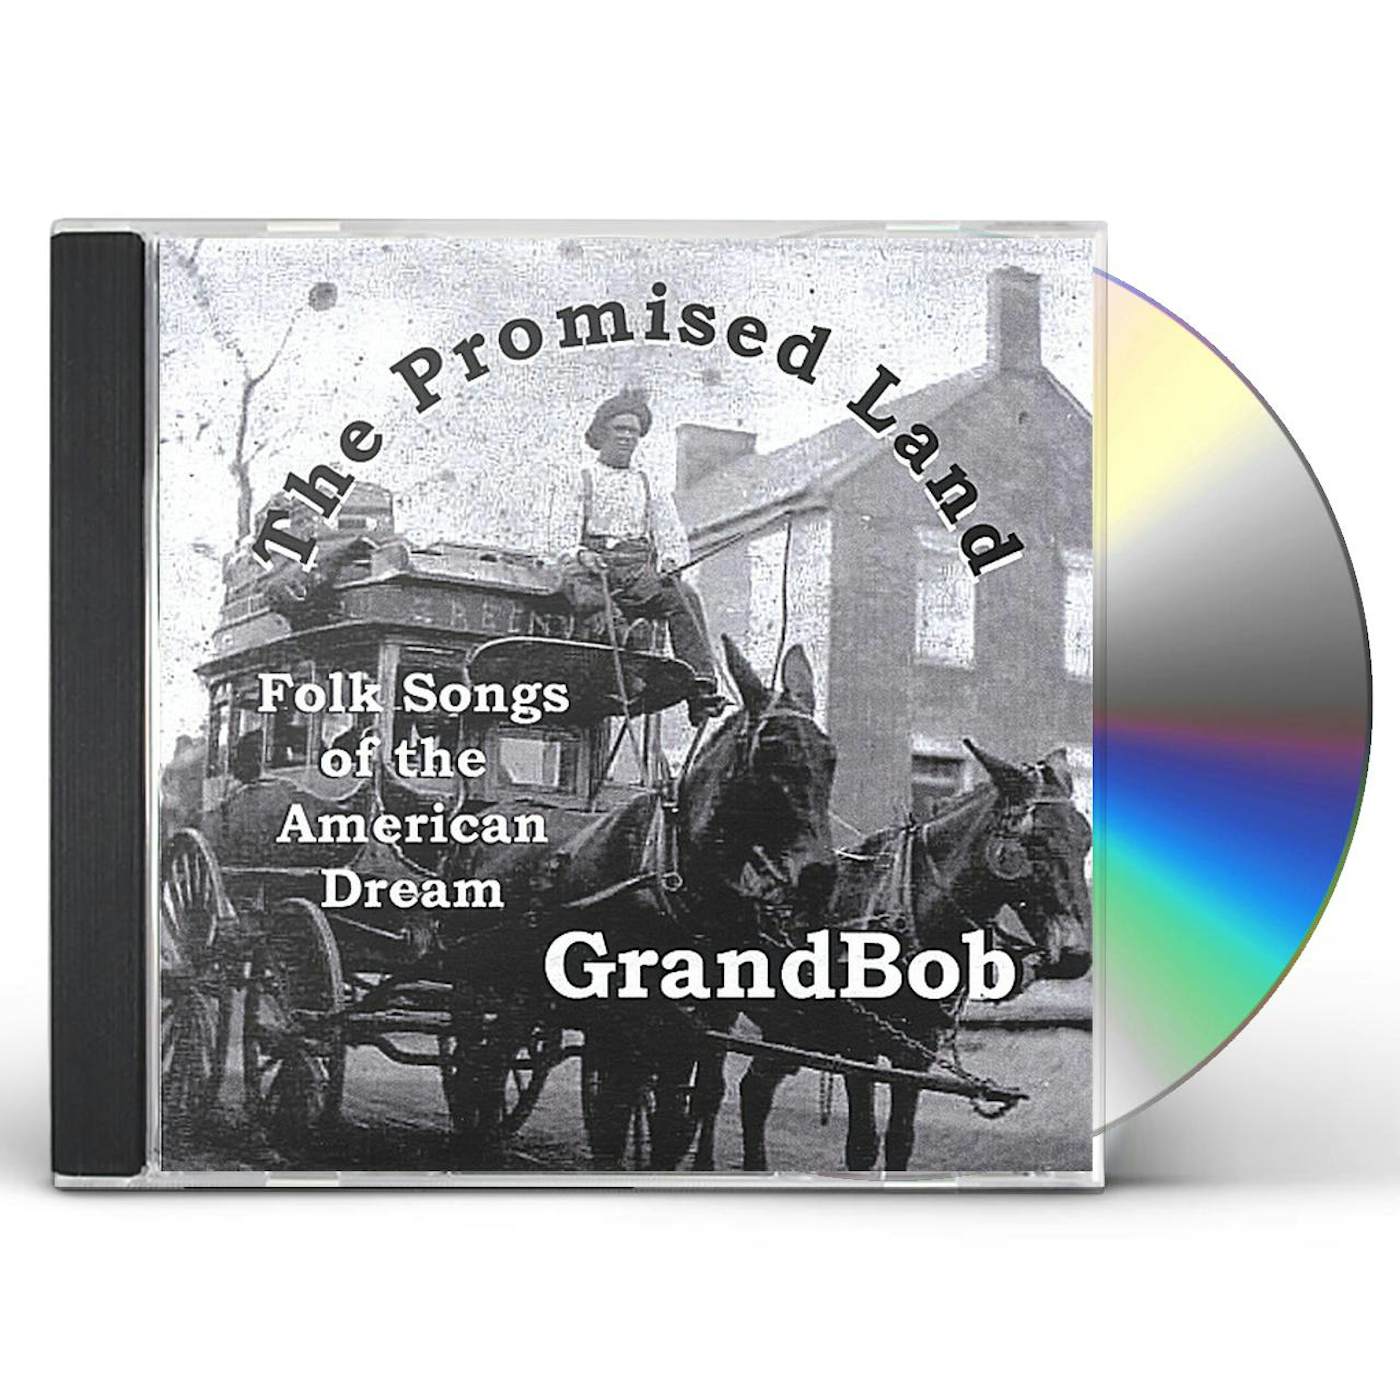 GrandBob PROMISED LAND CD